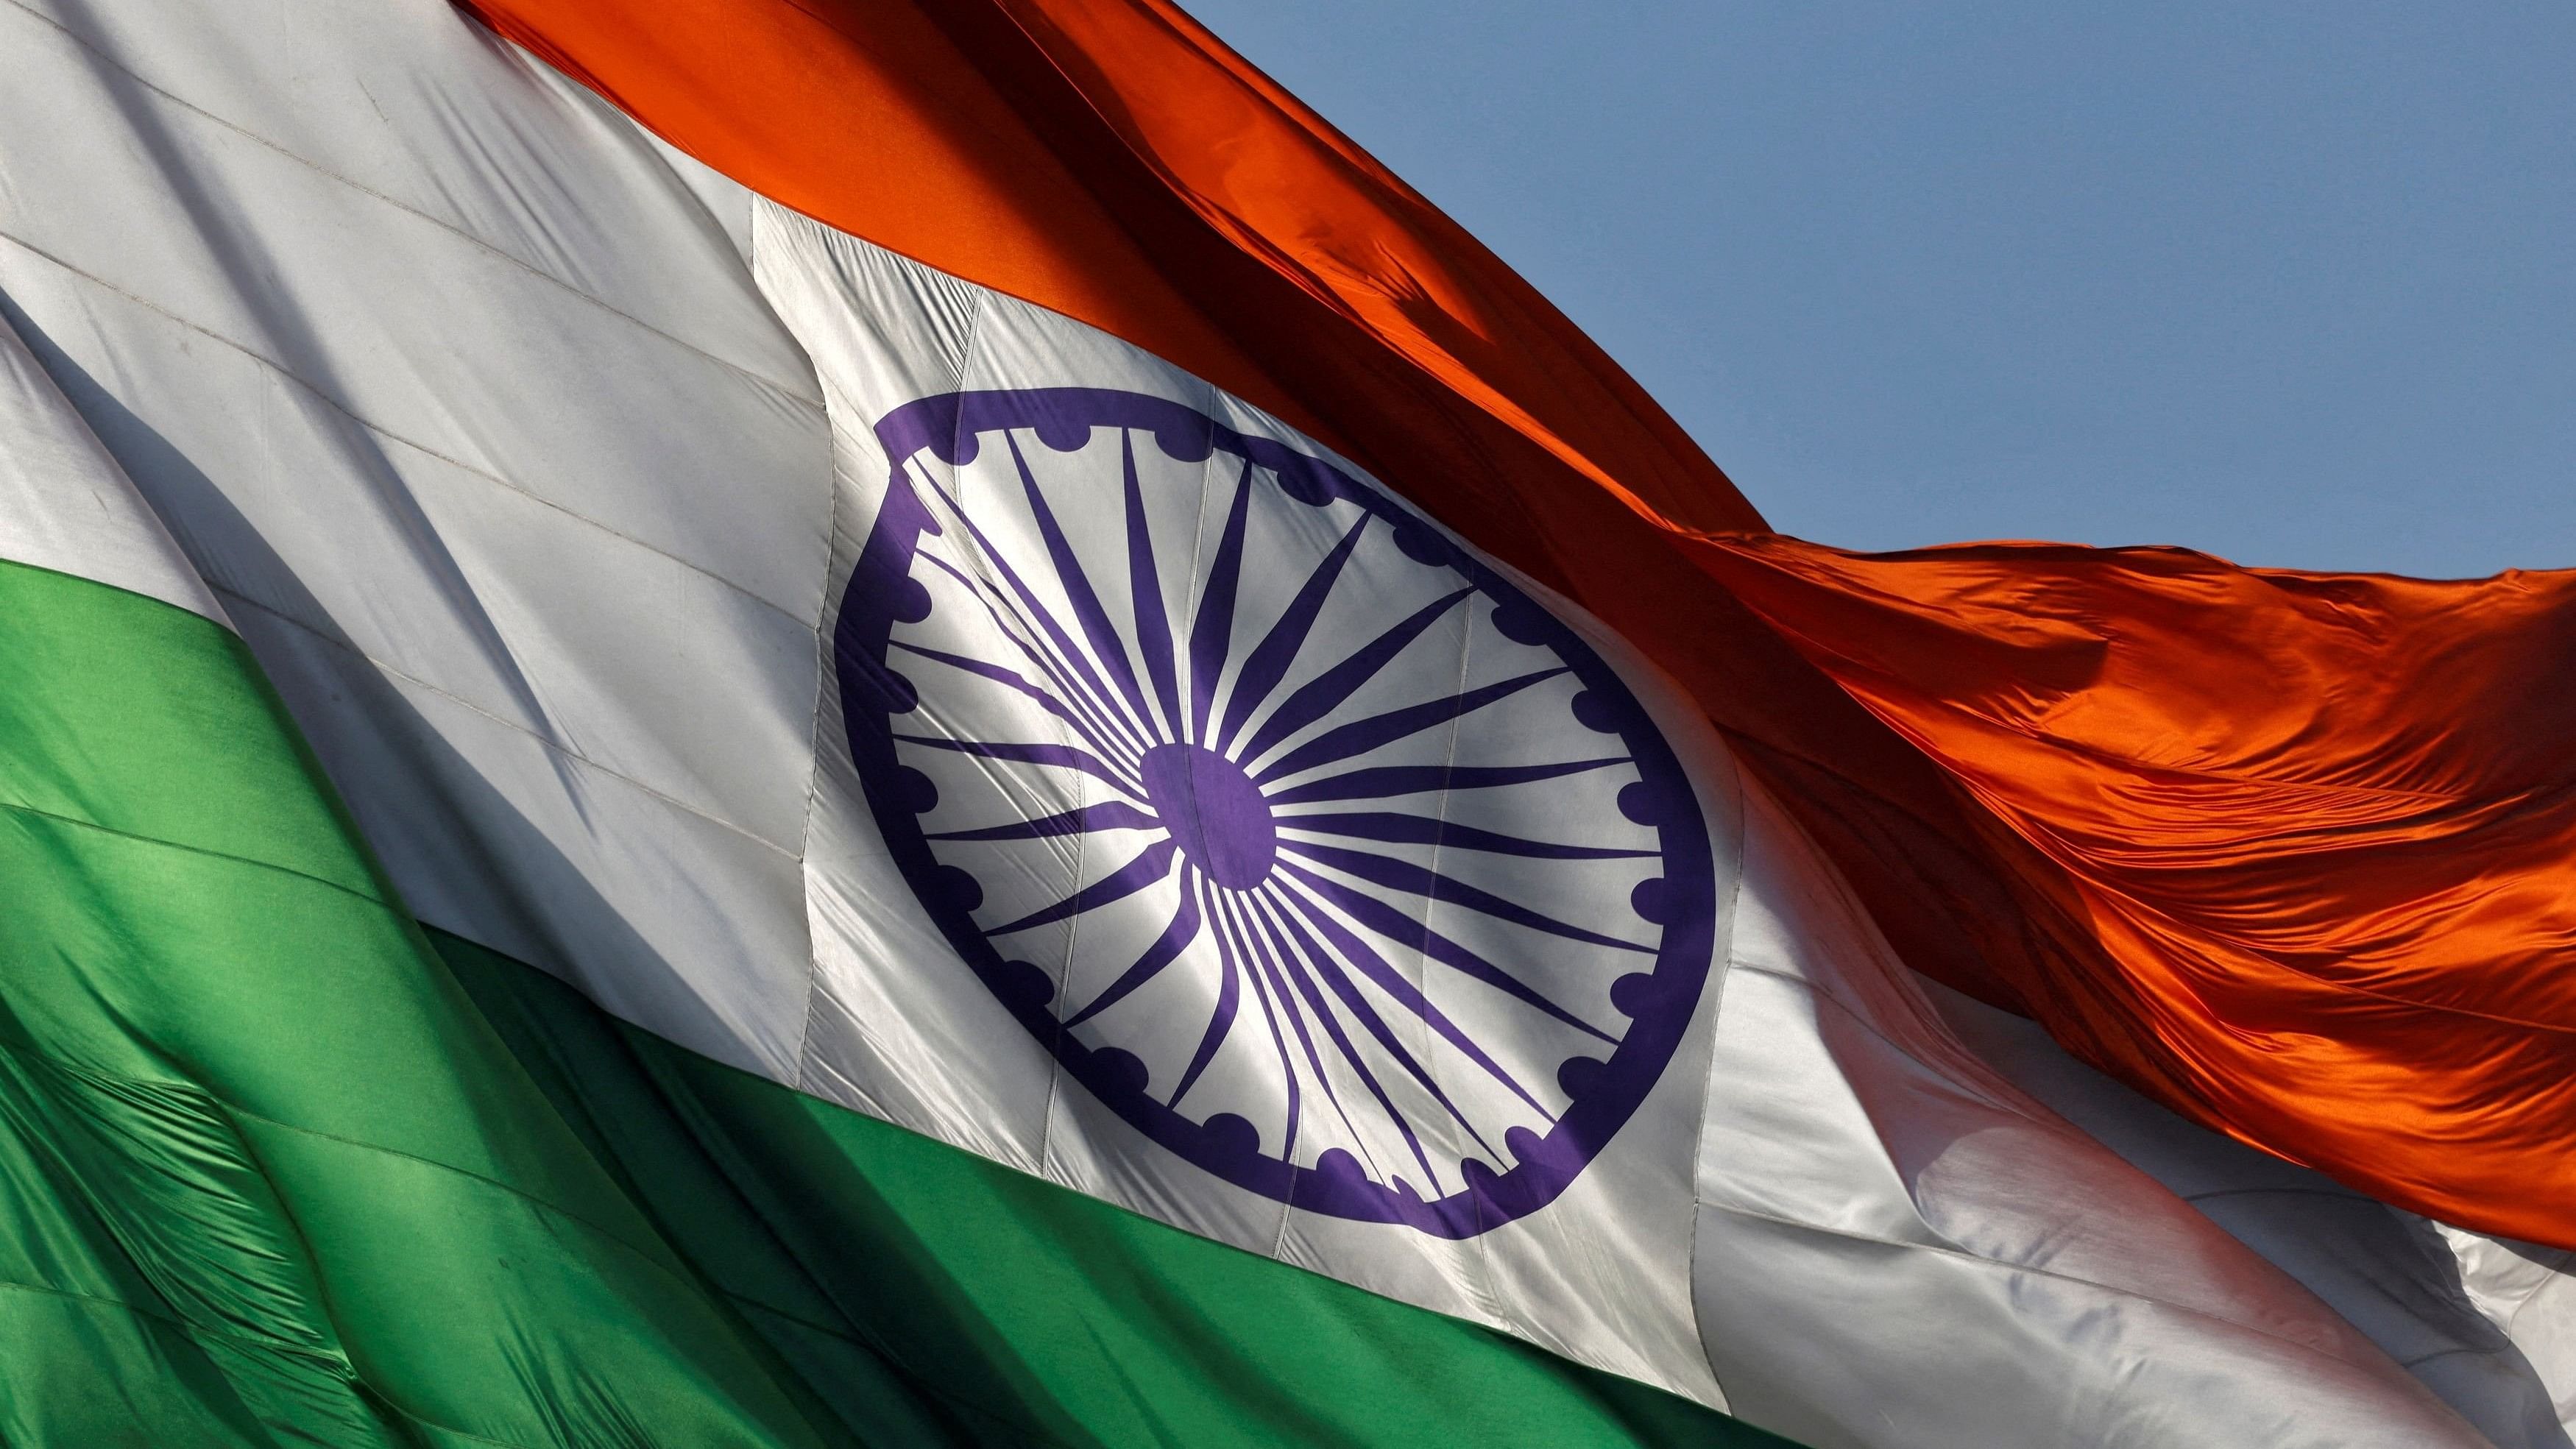 <div class="paragraphs"><p>The Indian national flag flutters</p></div>